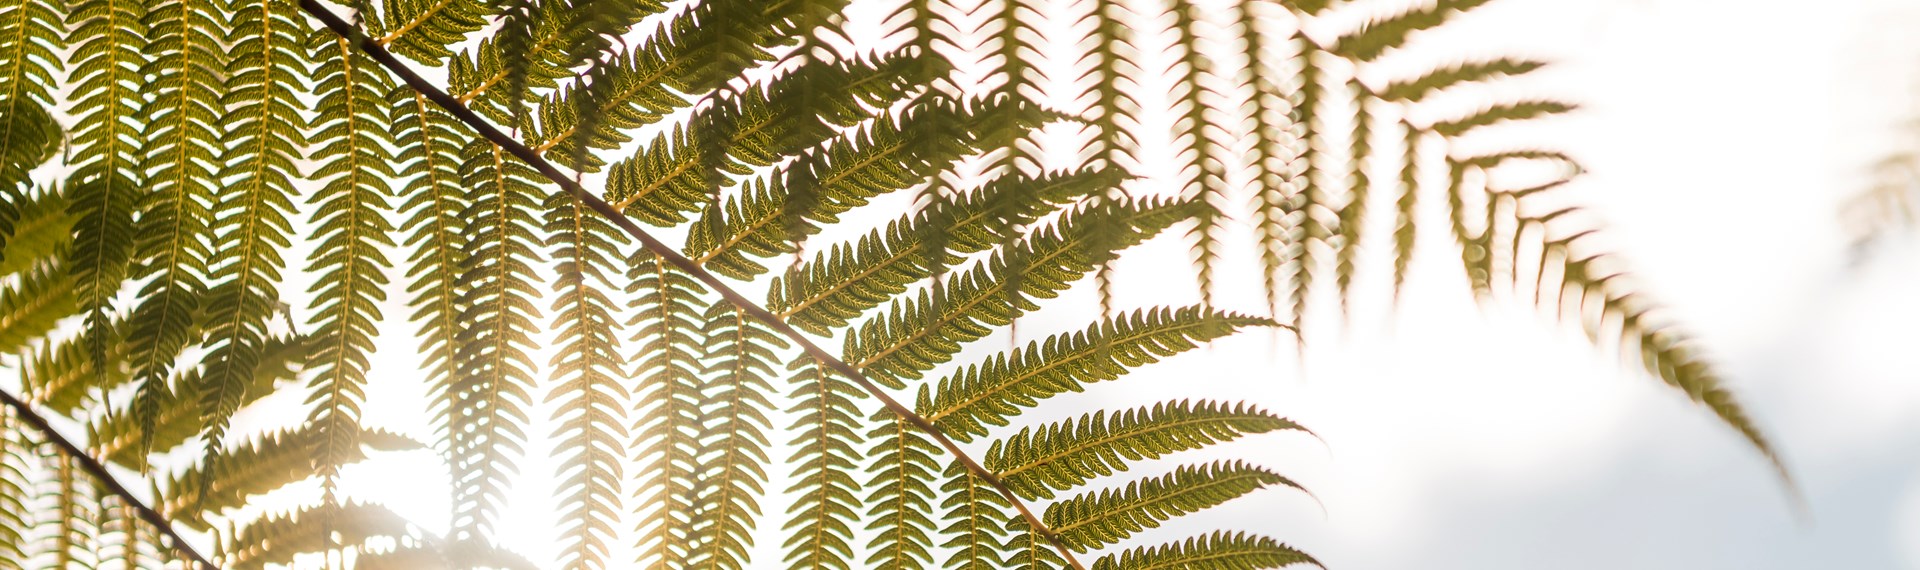 Native fern frond in the sun, Marlborough Sounds, New Zealand